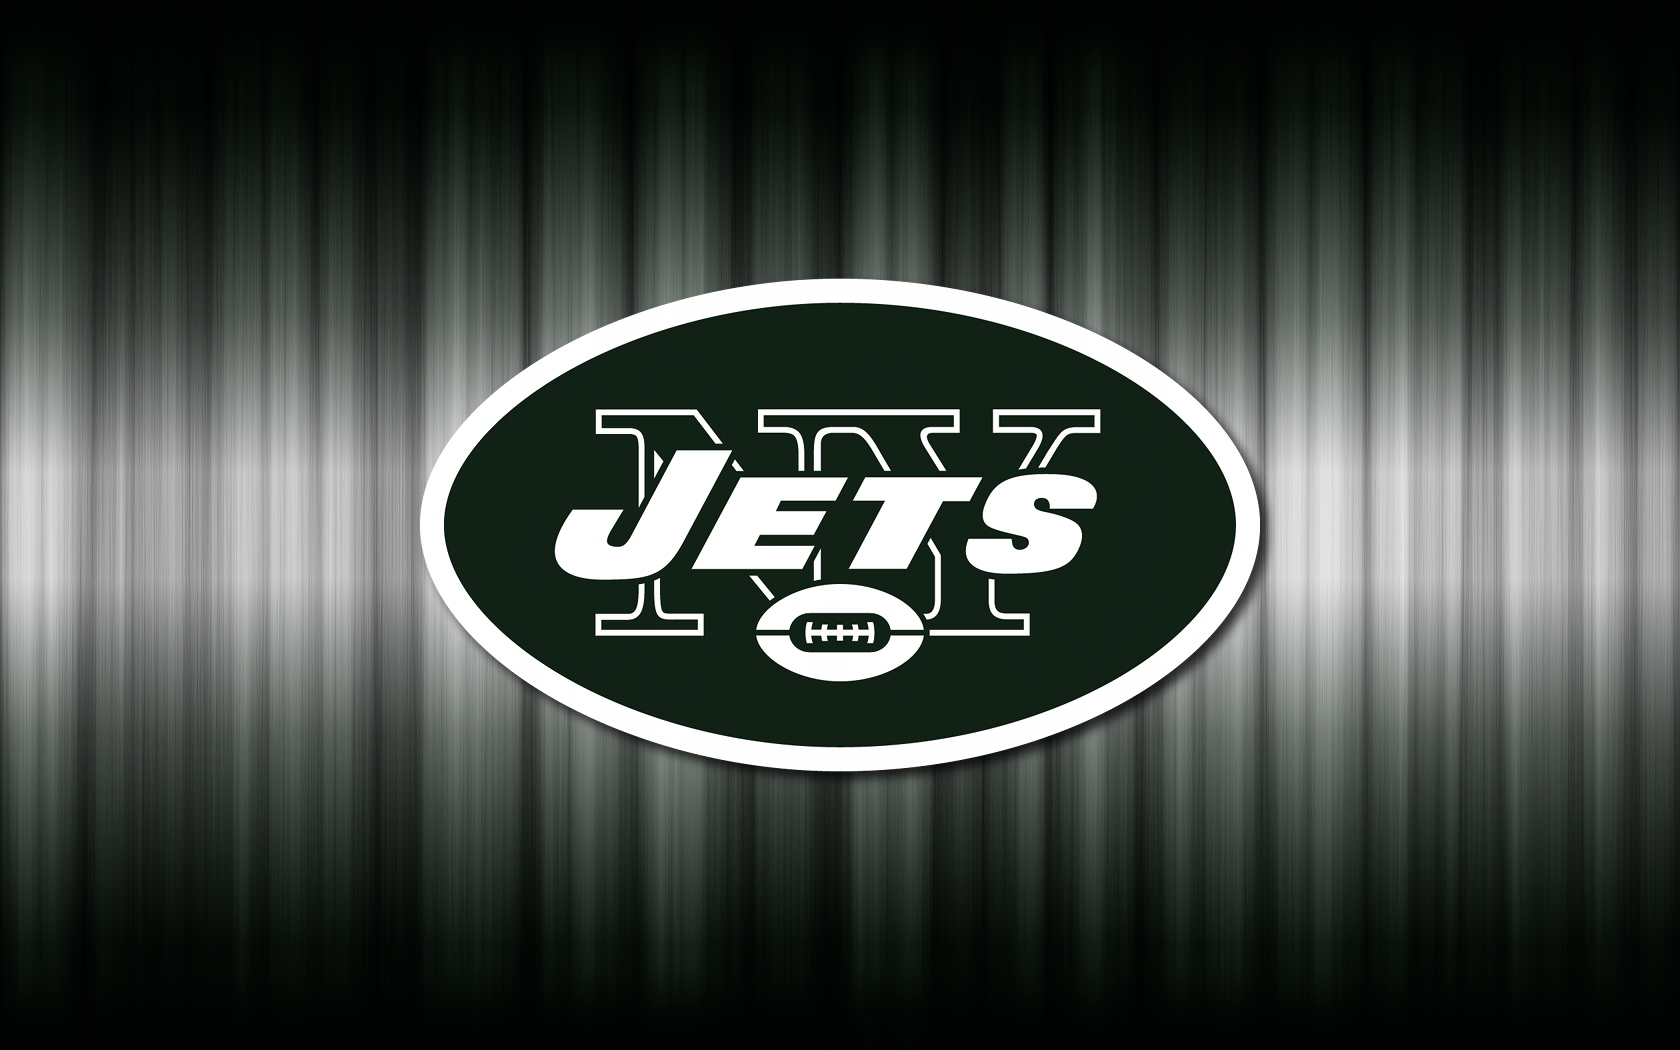  Jets 2014 NFL Logo Free HD Download Wallpapers   Fullsize Wallpaper